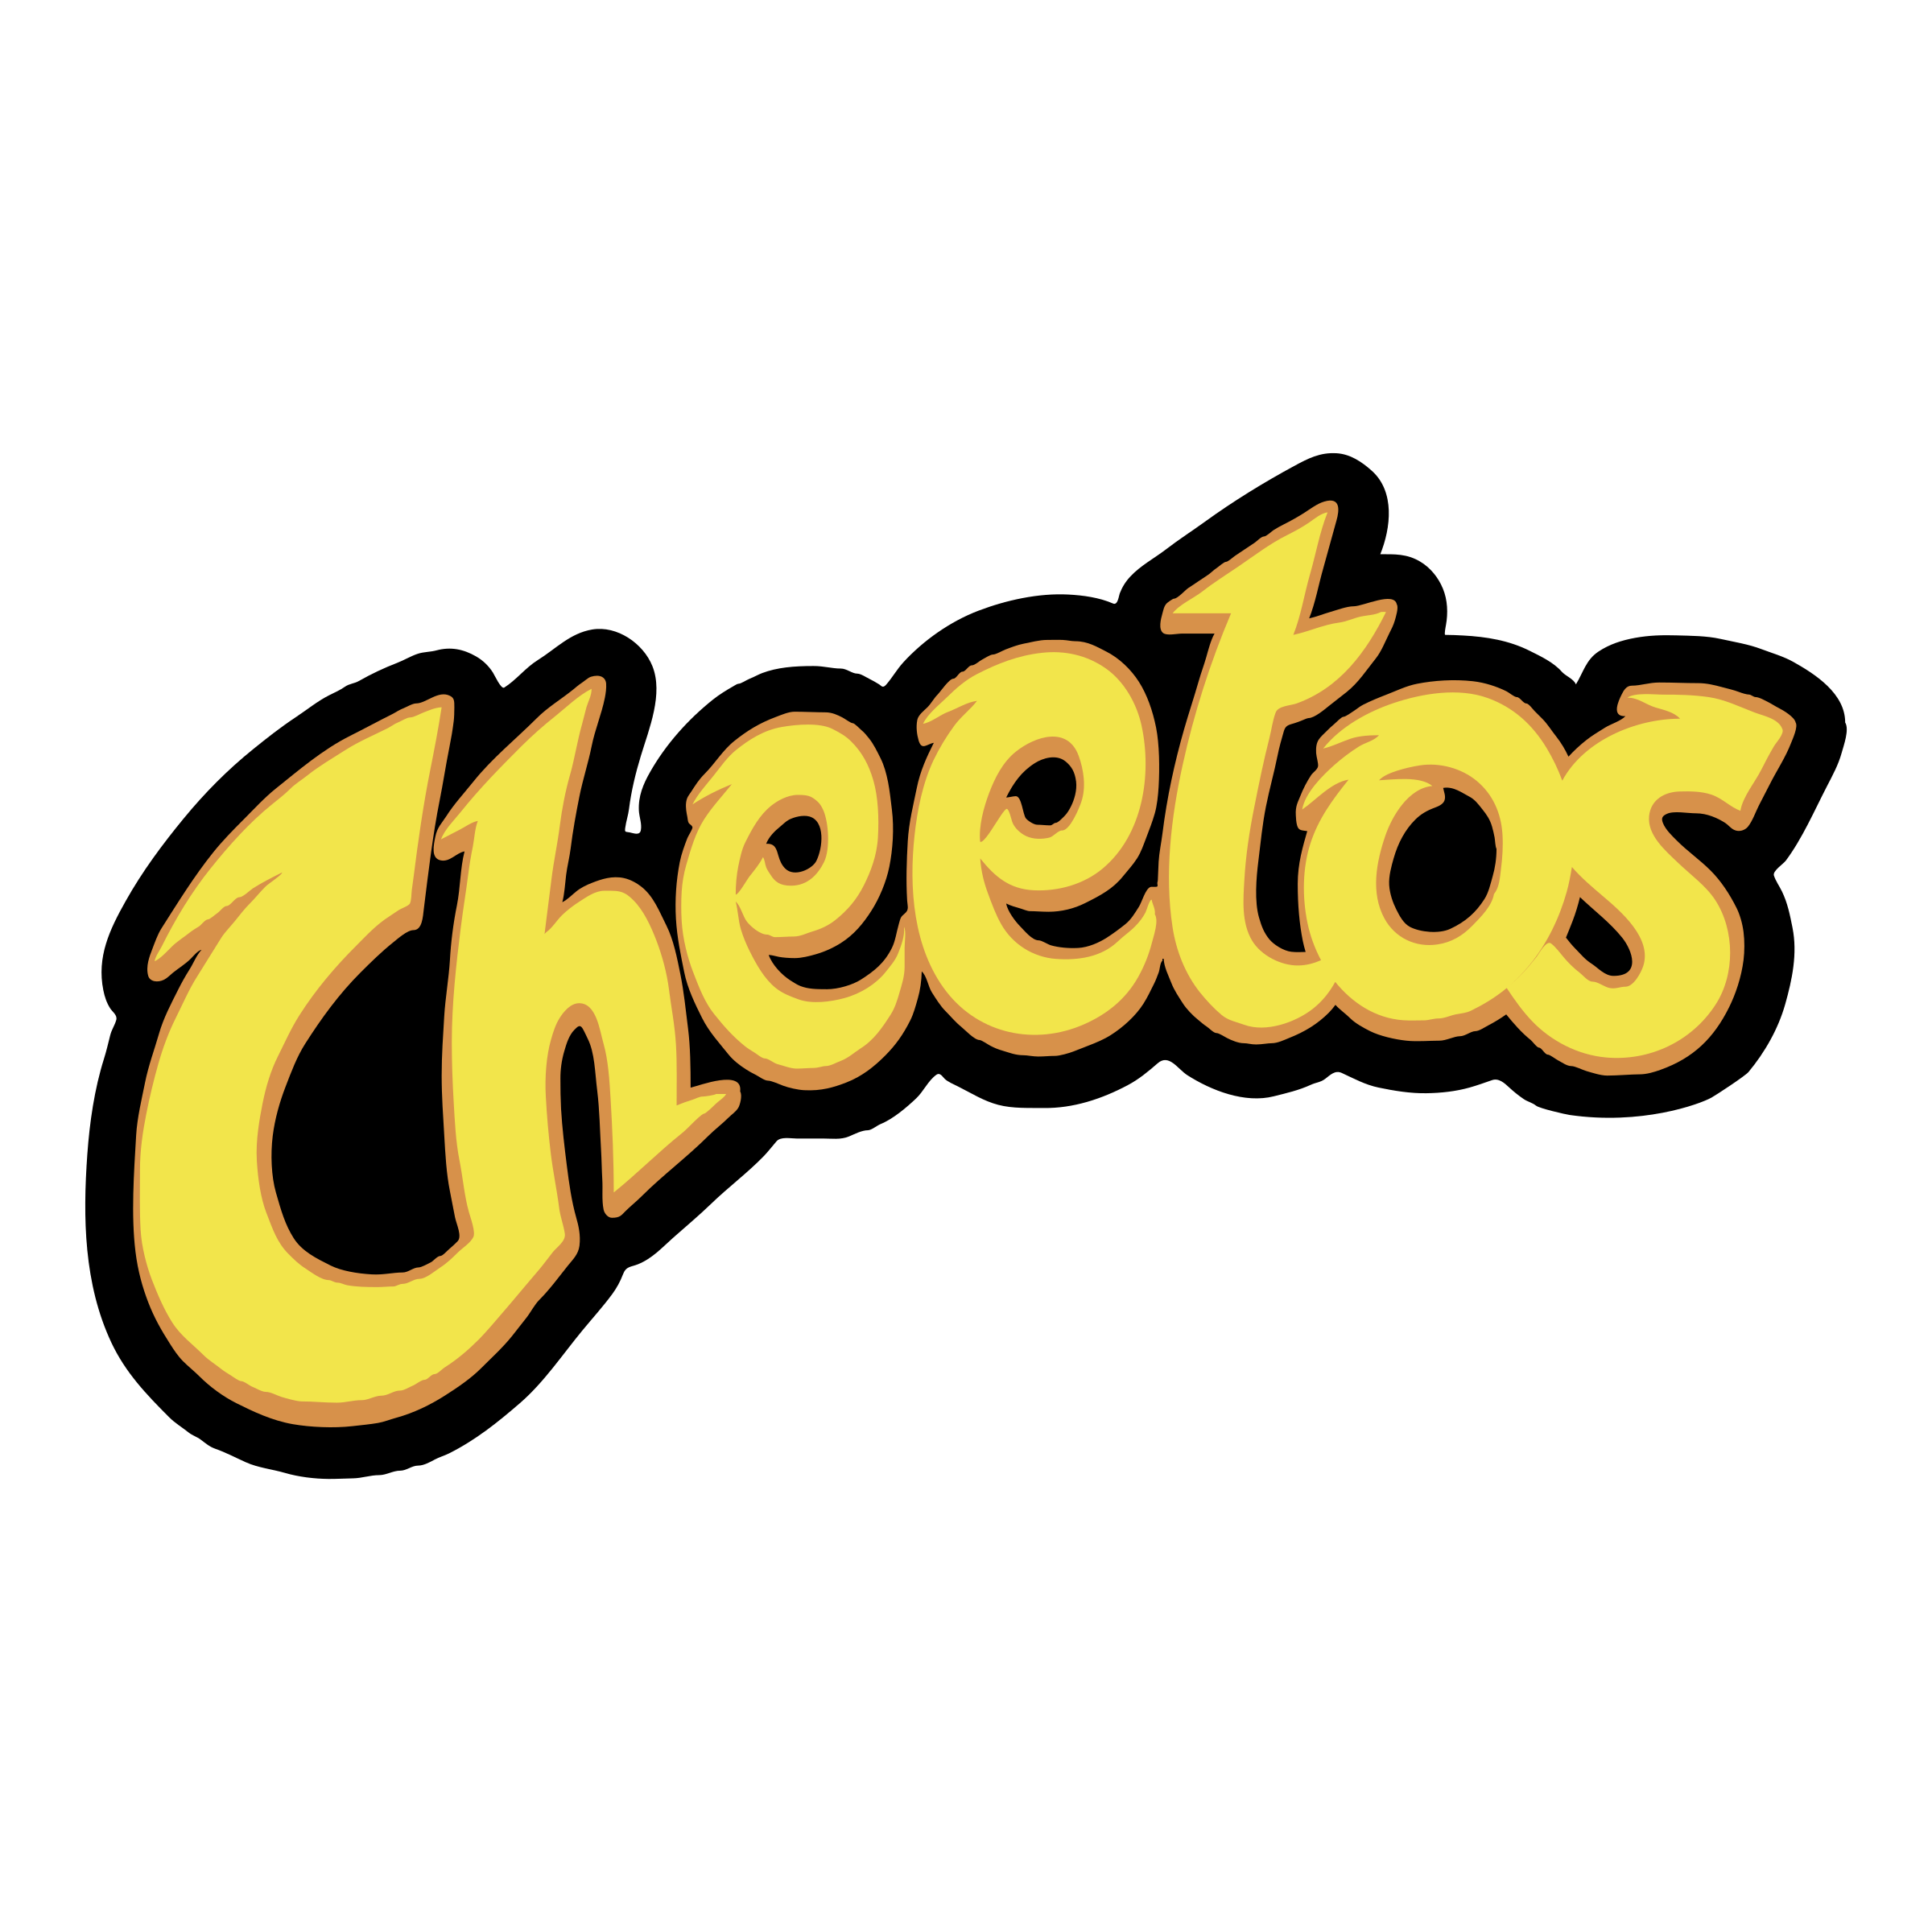 Cheetos Logo - Cheetos Logo PNG Transparent & SVG Vector - Freebie Supply